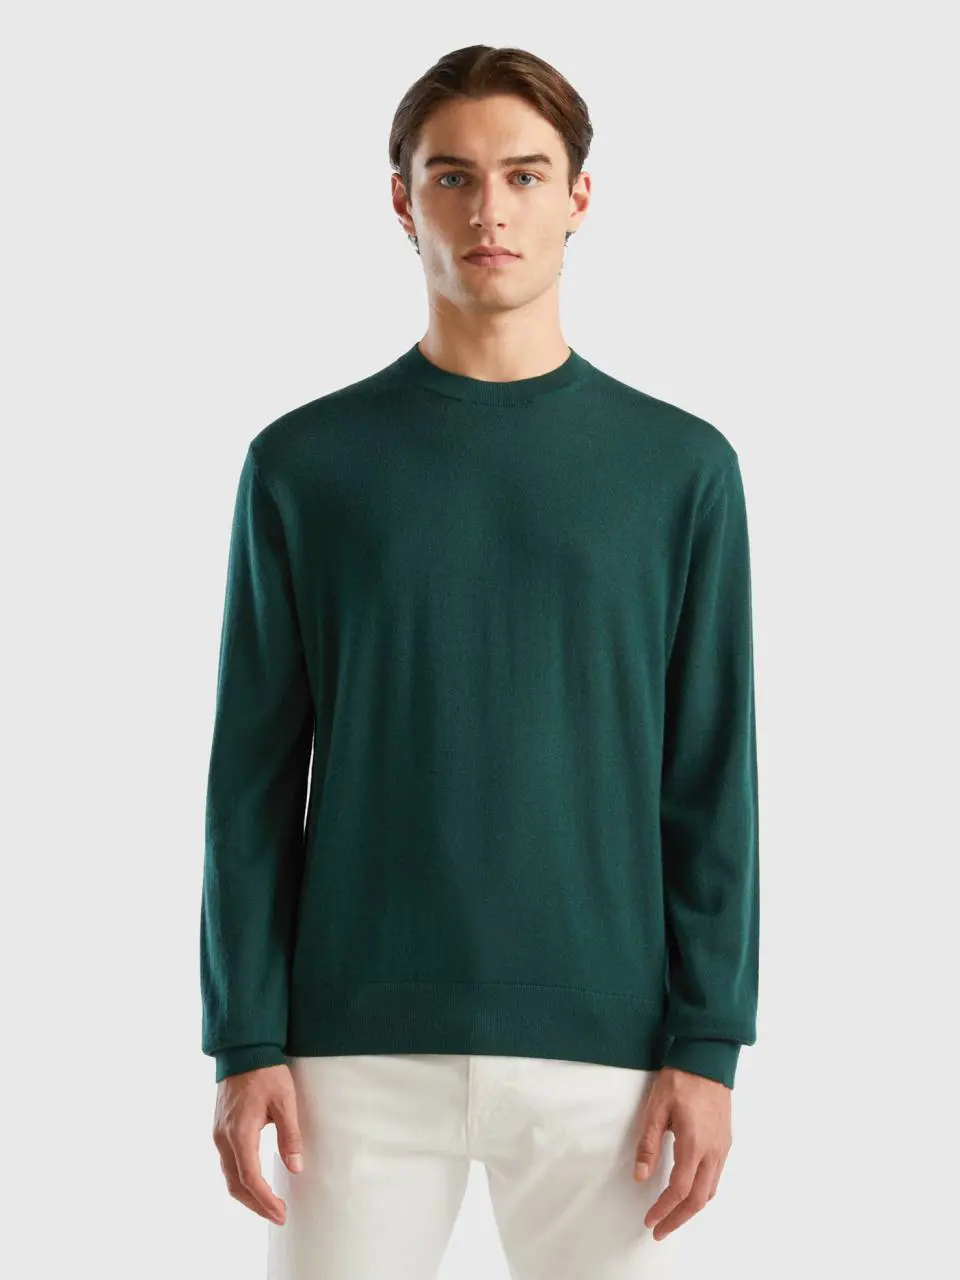 Benetton dark green sweater in pure merino wool. 1